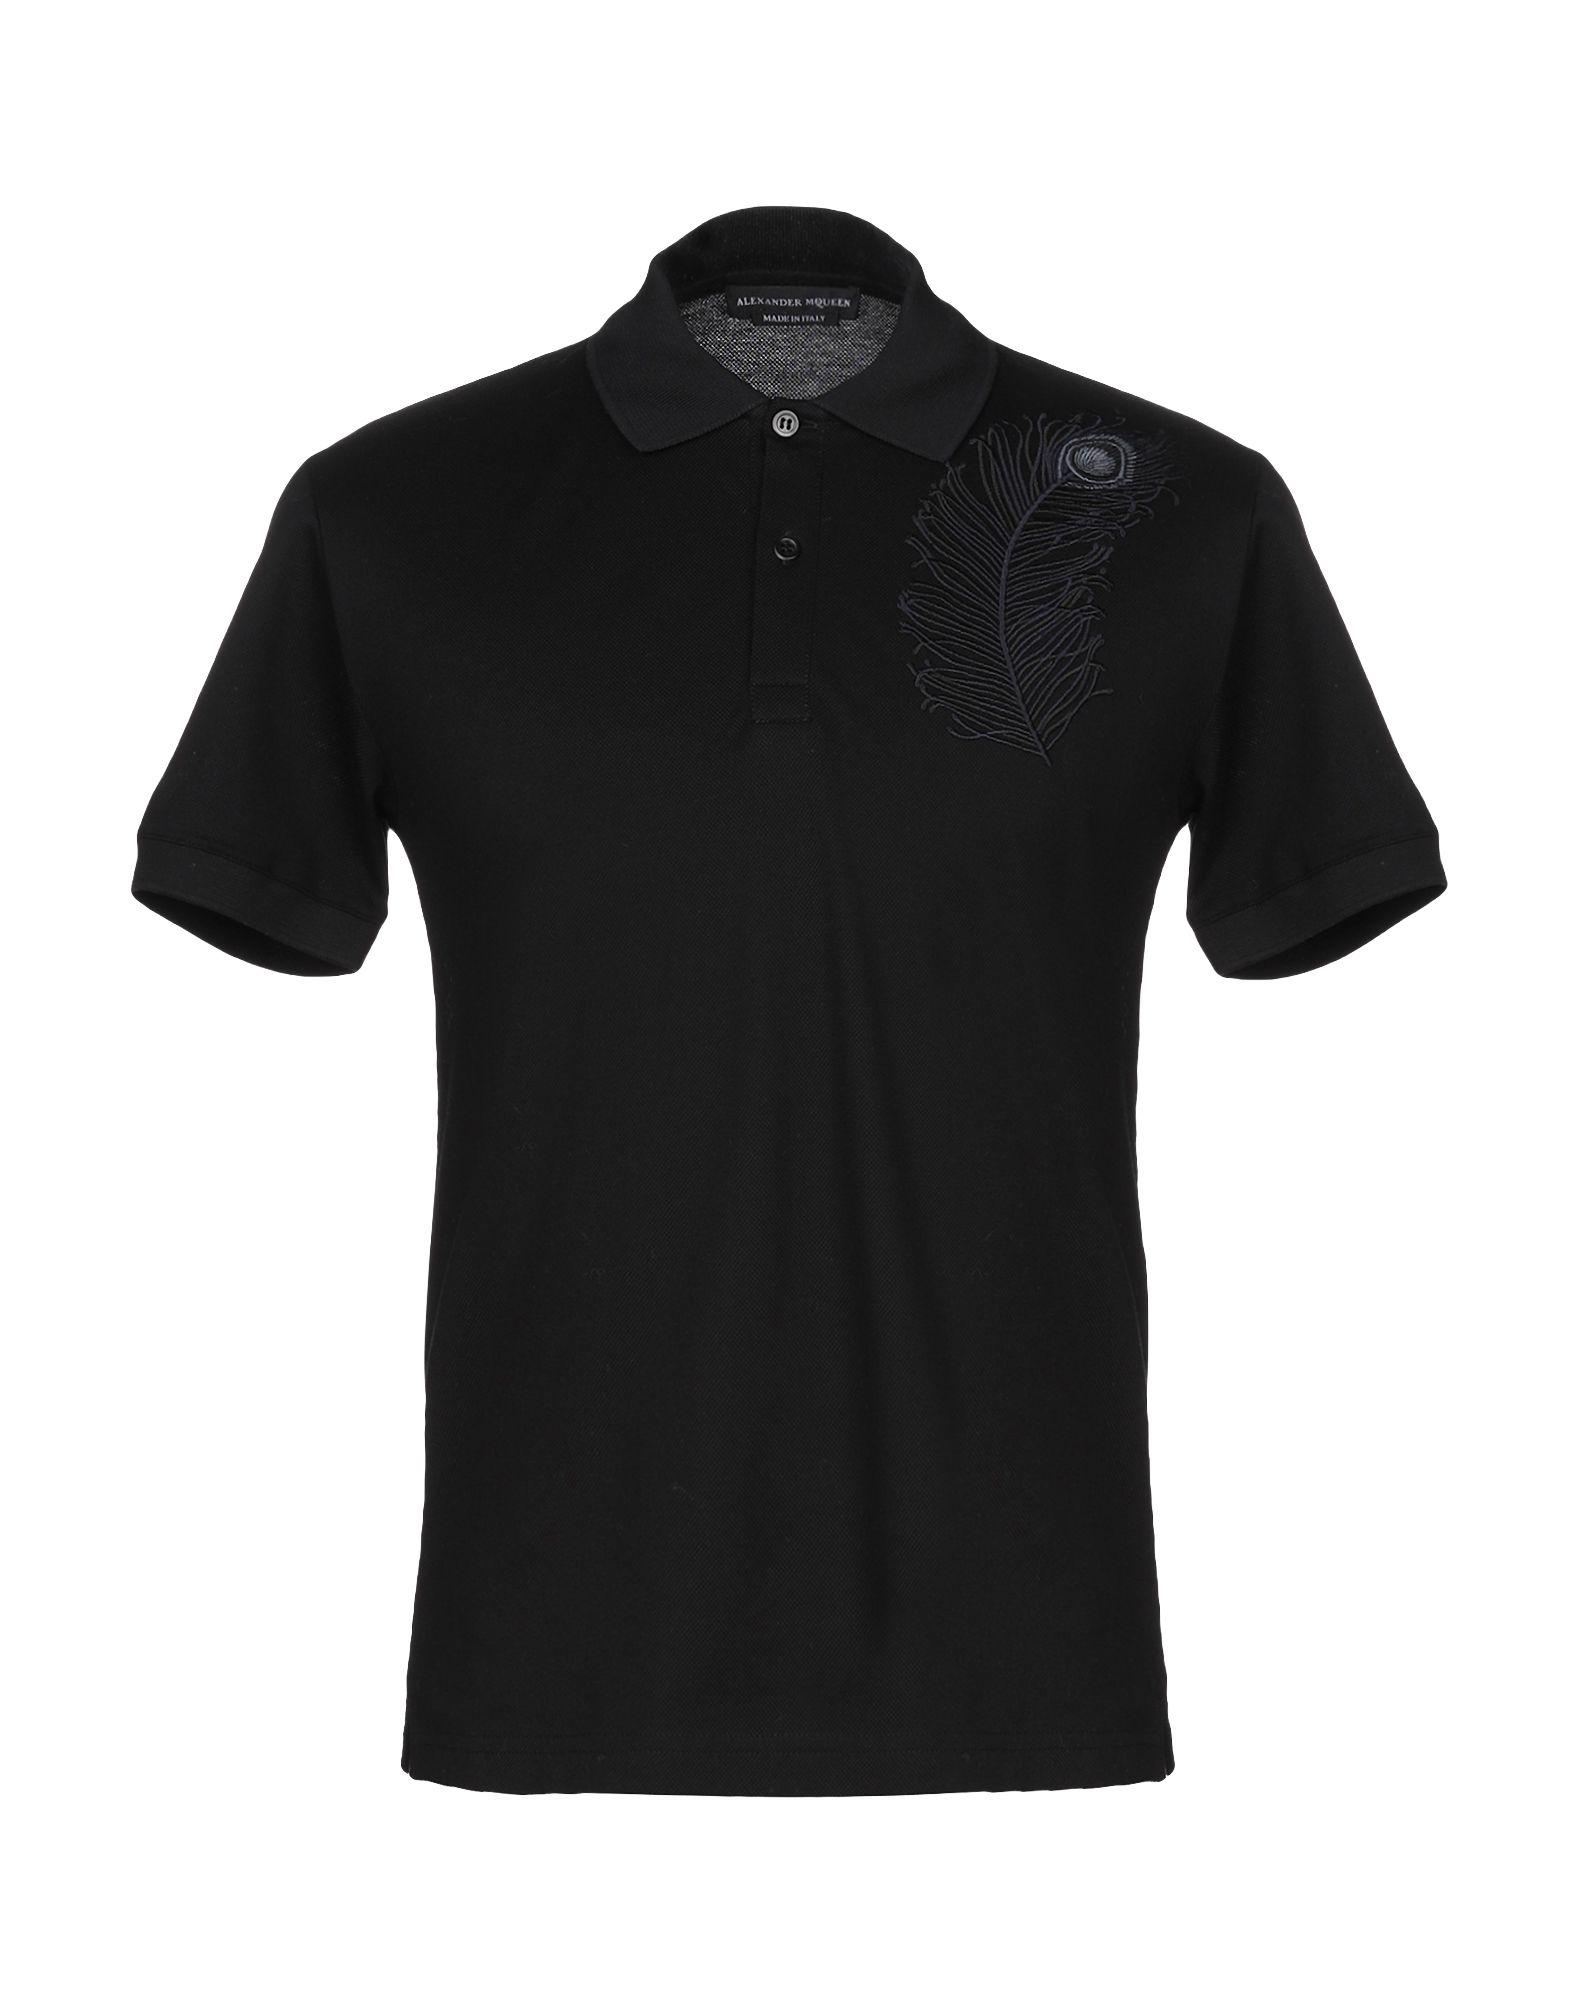 Lyst - Alexander McQueen Polo Shirt in Black for Men